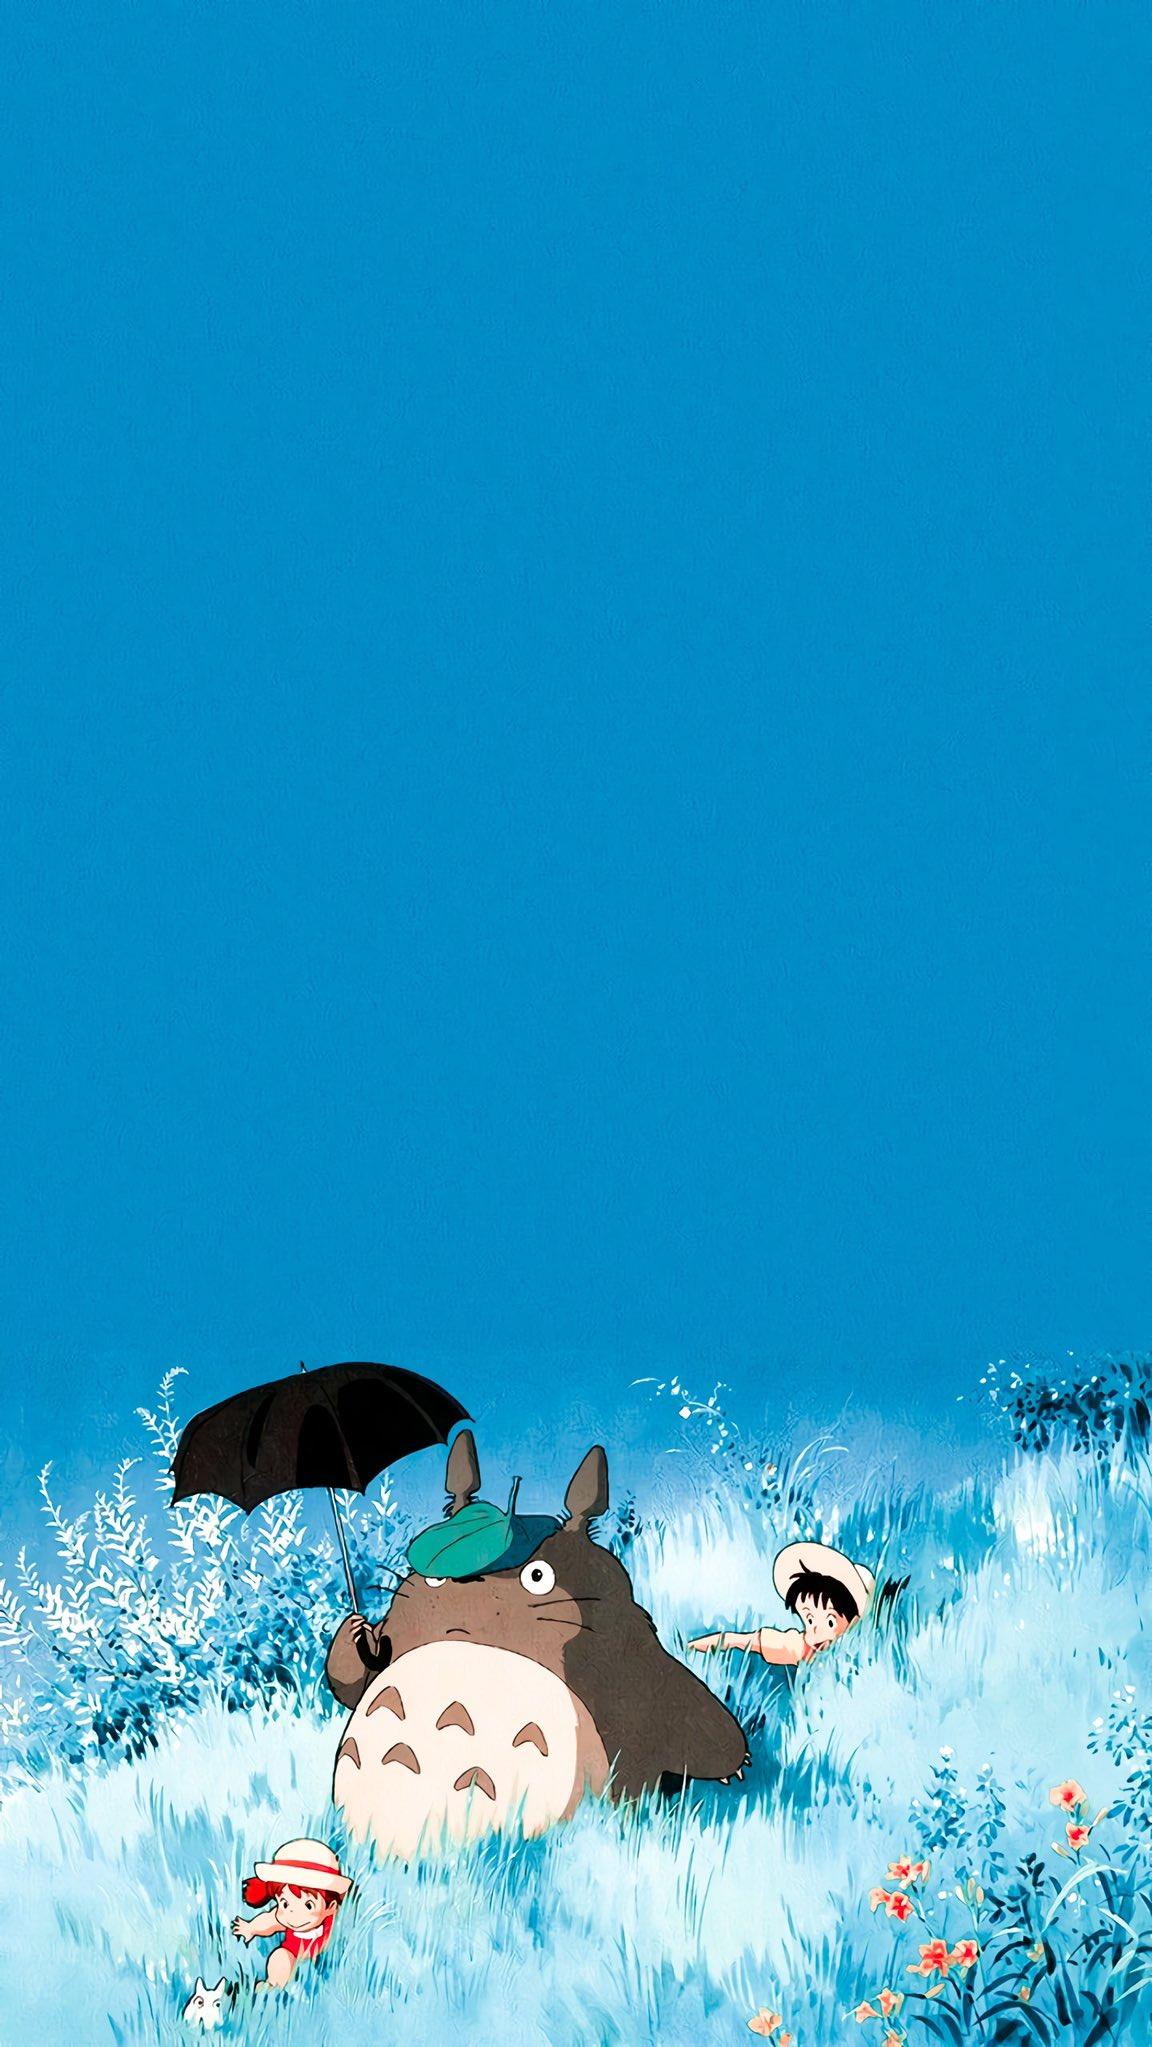 Studio Ghibli Pictures on X Anime My Neighbor Totoro httpst